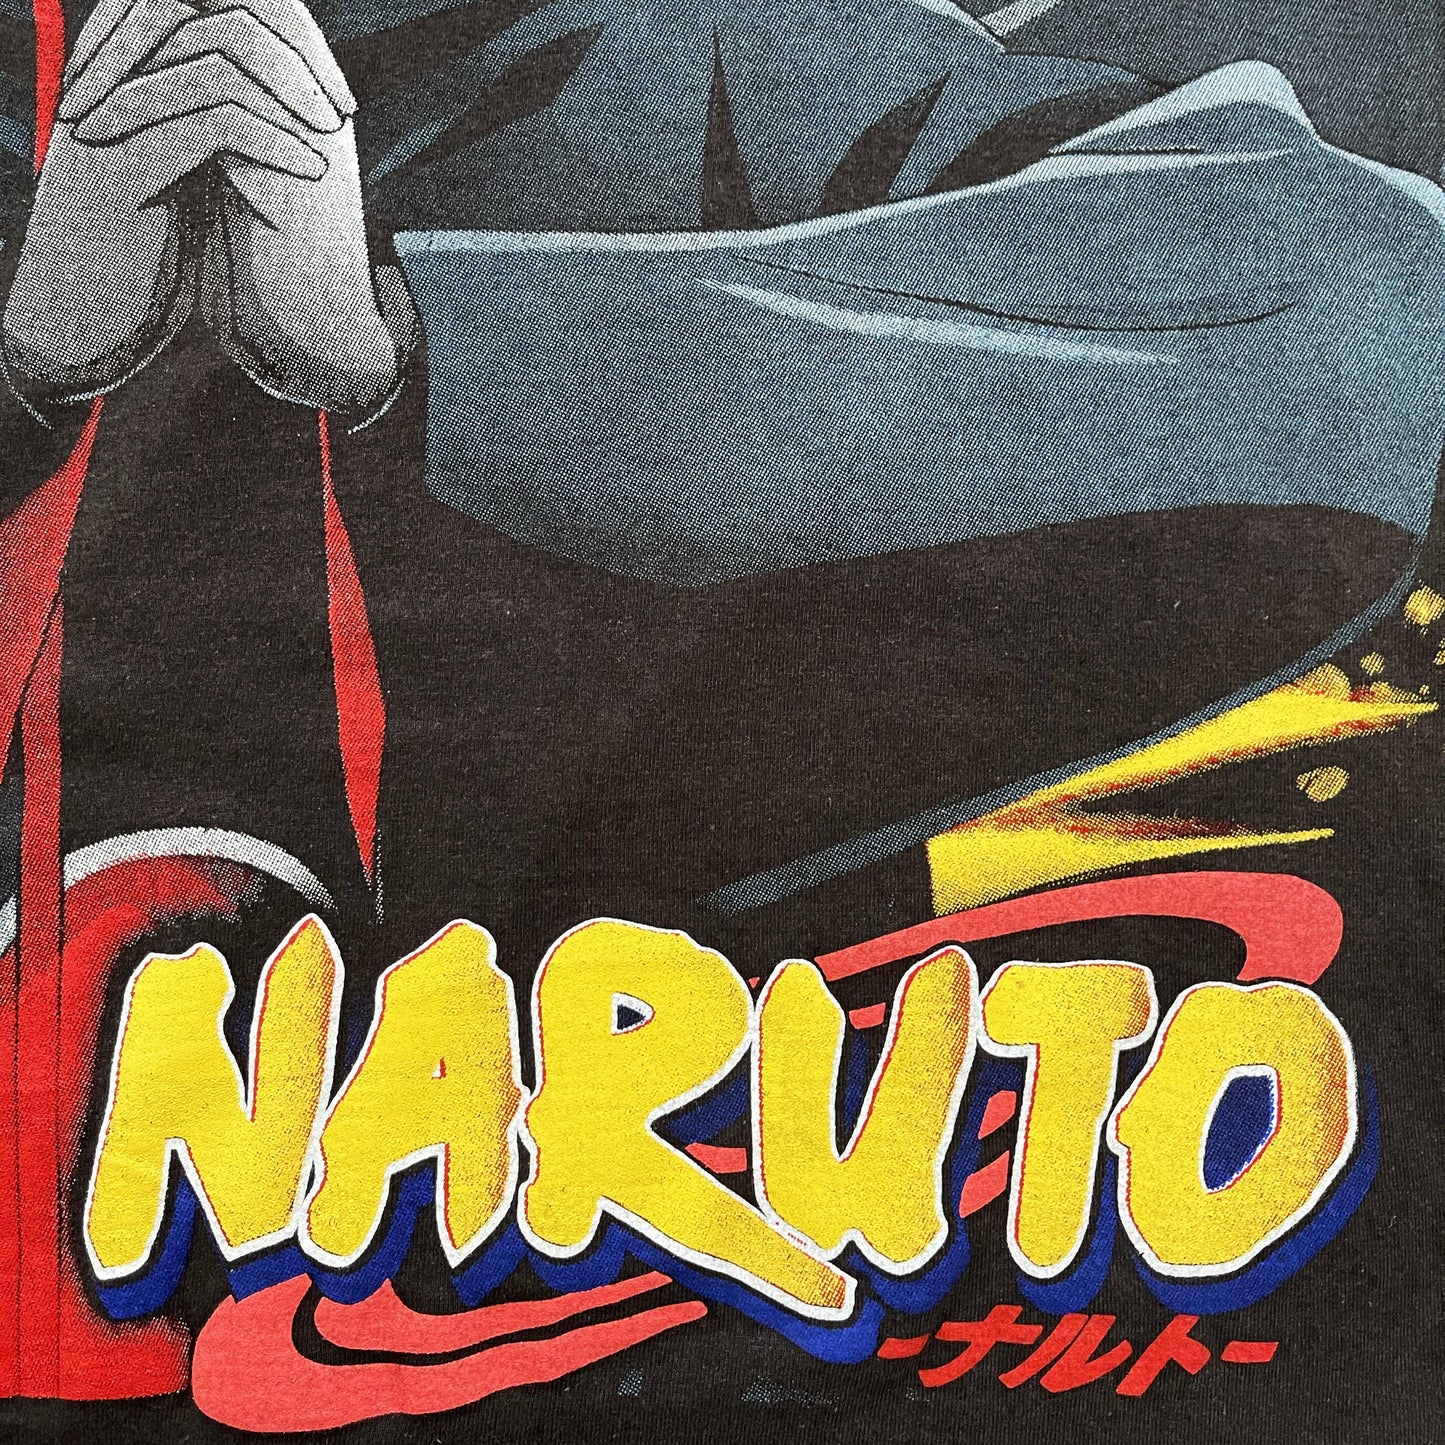 Naruto T-Shirt - L